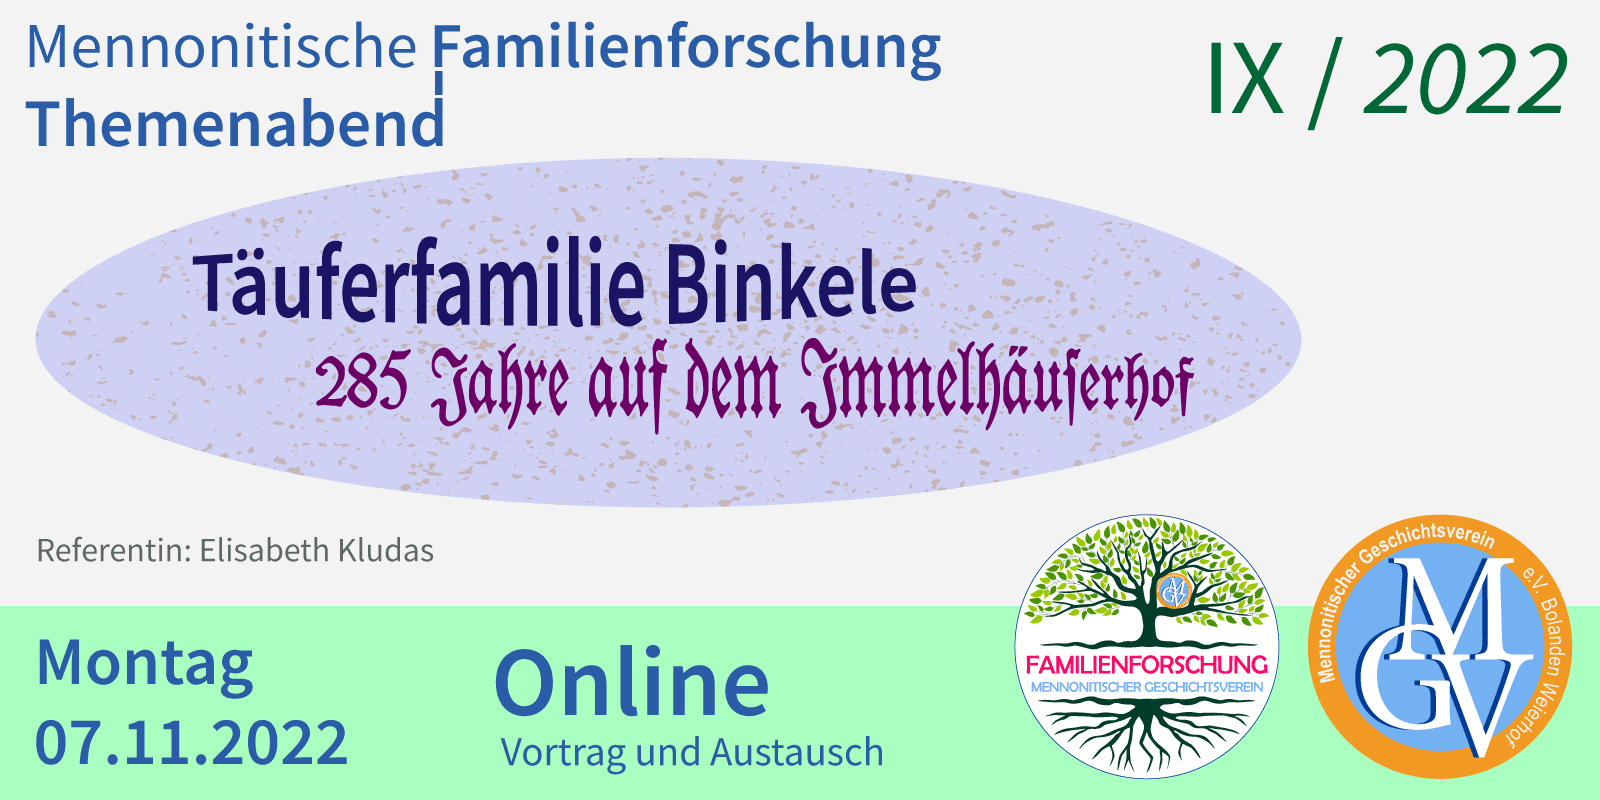 Binkele, Binkley, Familienforschung Mennonitischer Geschichtsverein, Forschungsstelle.